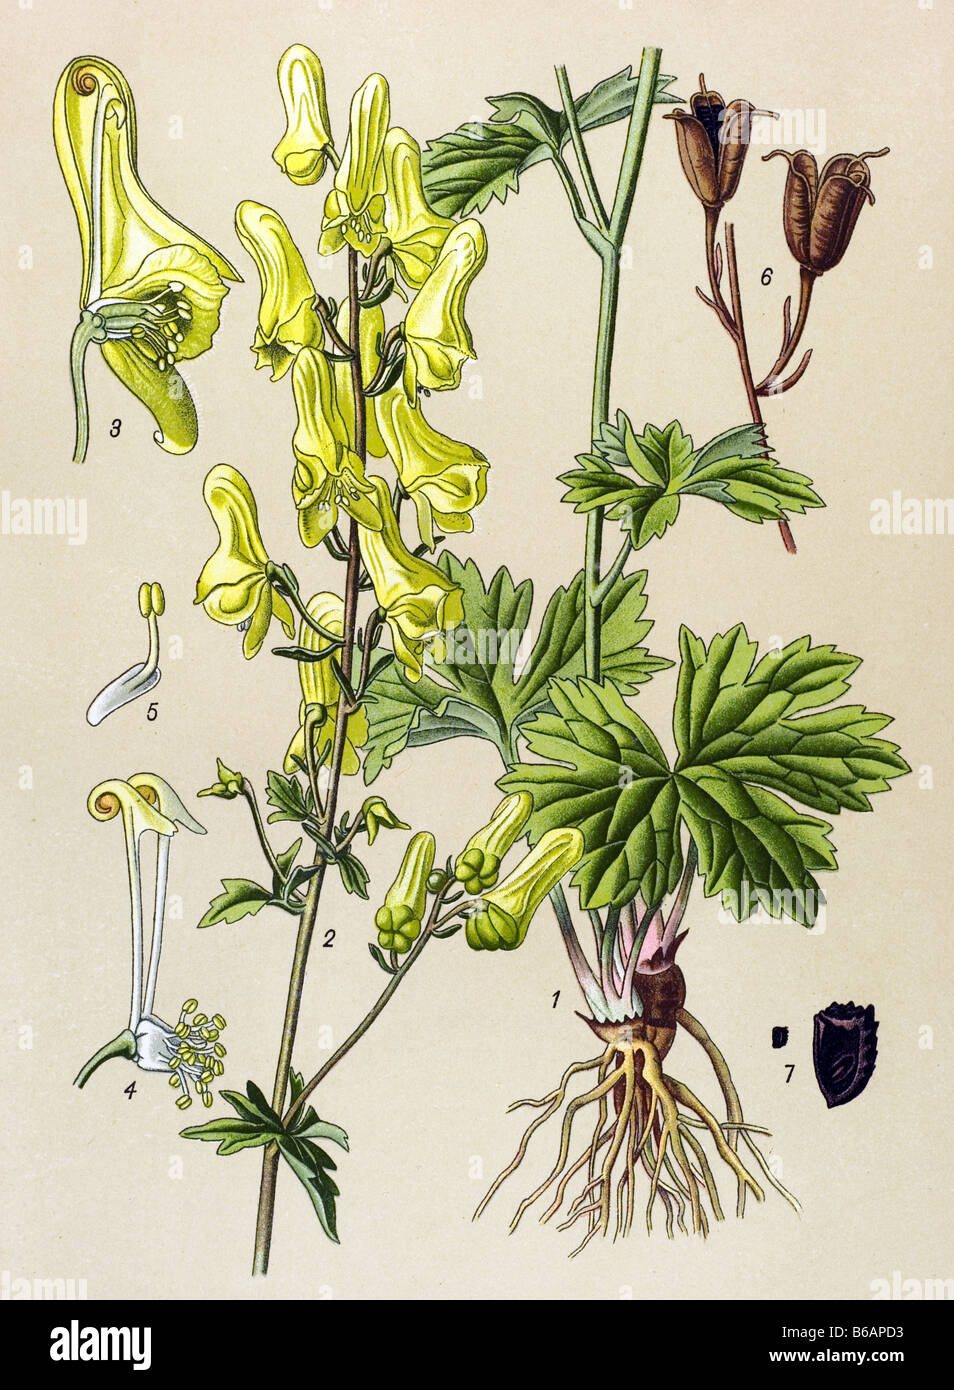 Northern Wolfsbane, Aconitum Lycoctonum, poisonous plants illustrations Stock Photo